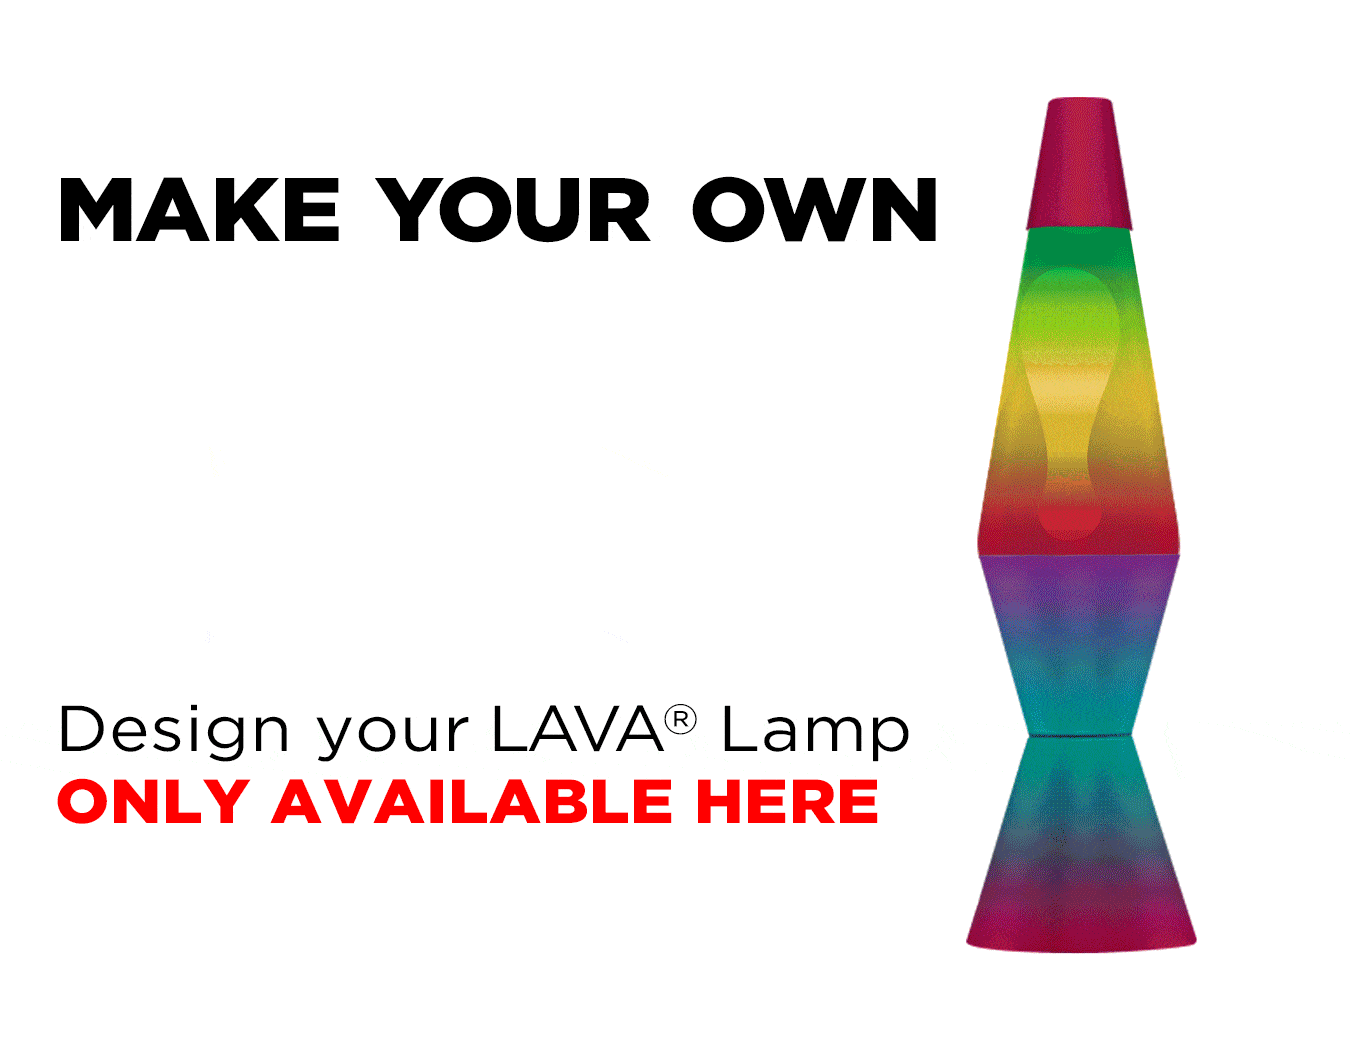 diskret kunstner Latterlig The Original Lava Lamp Company | Fun Decorative Lighting